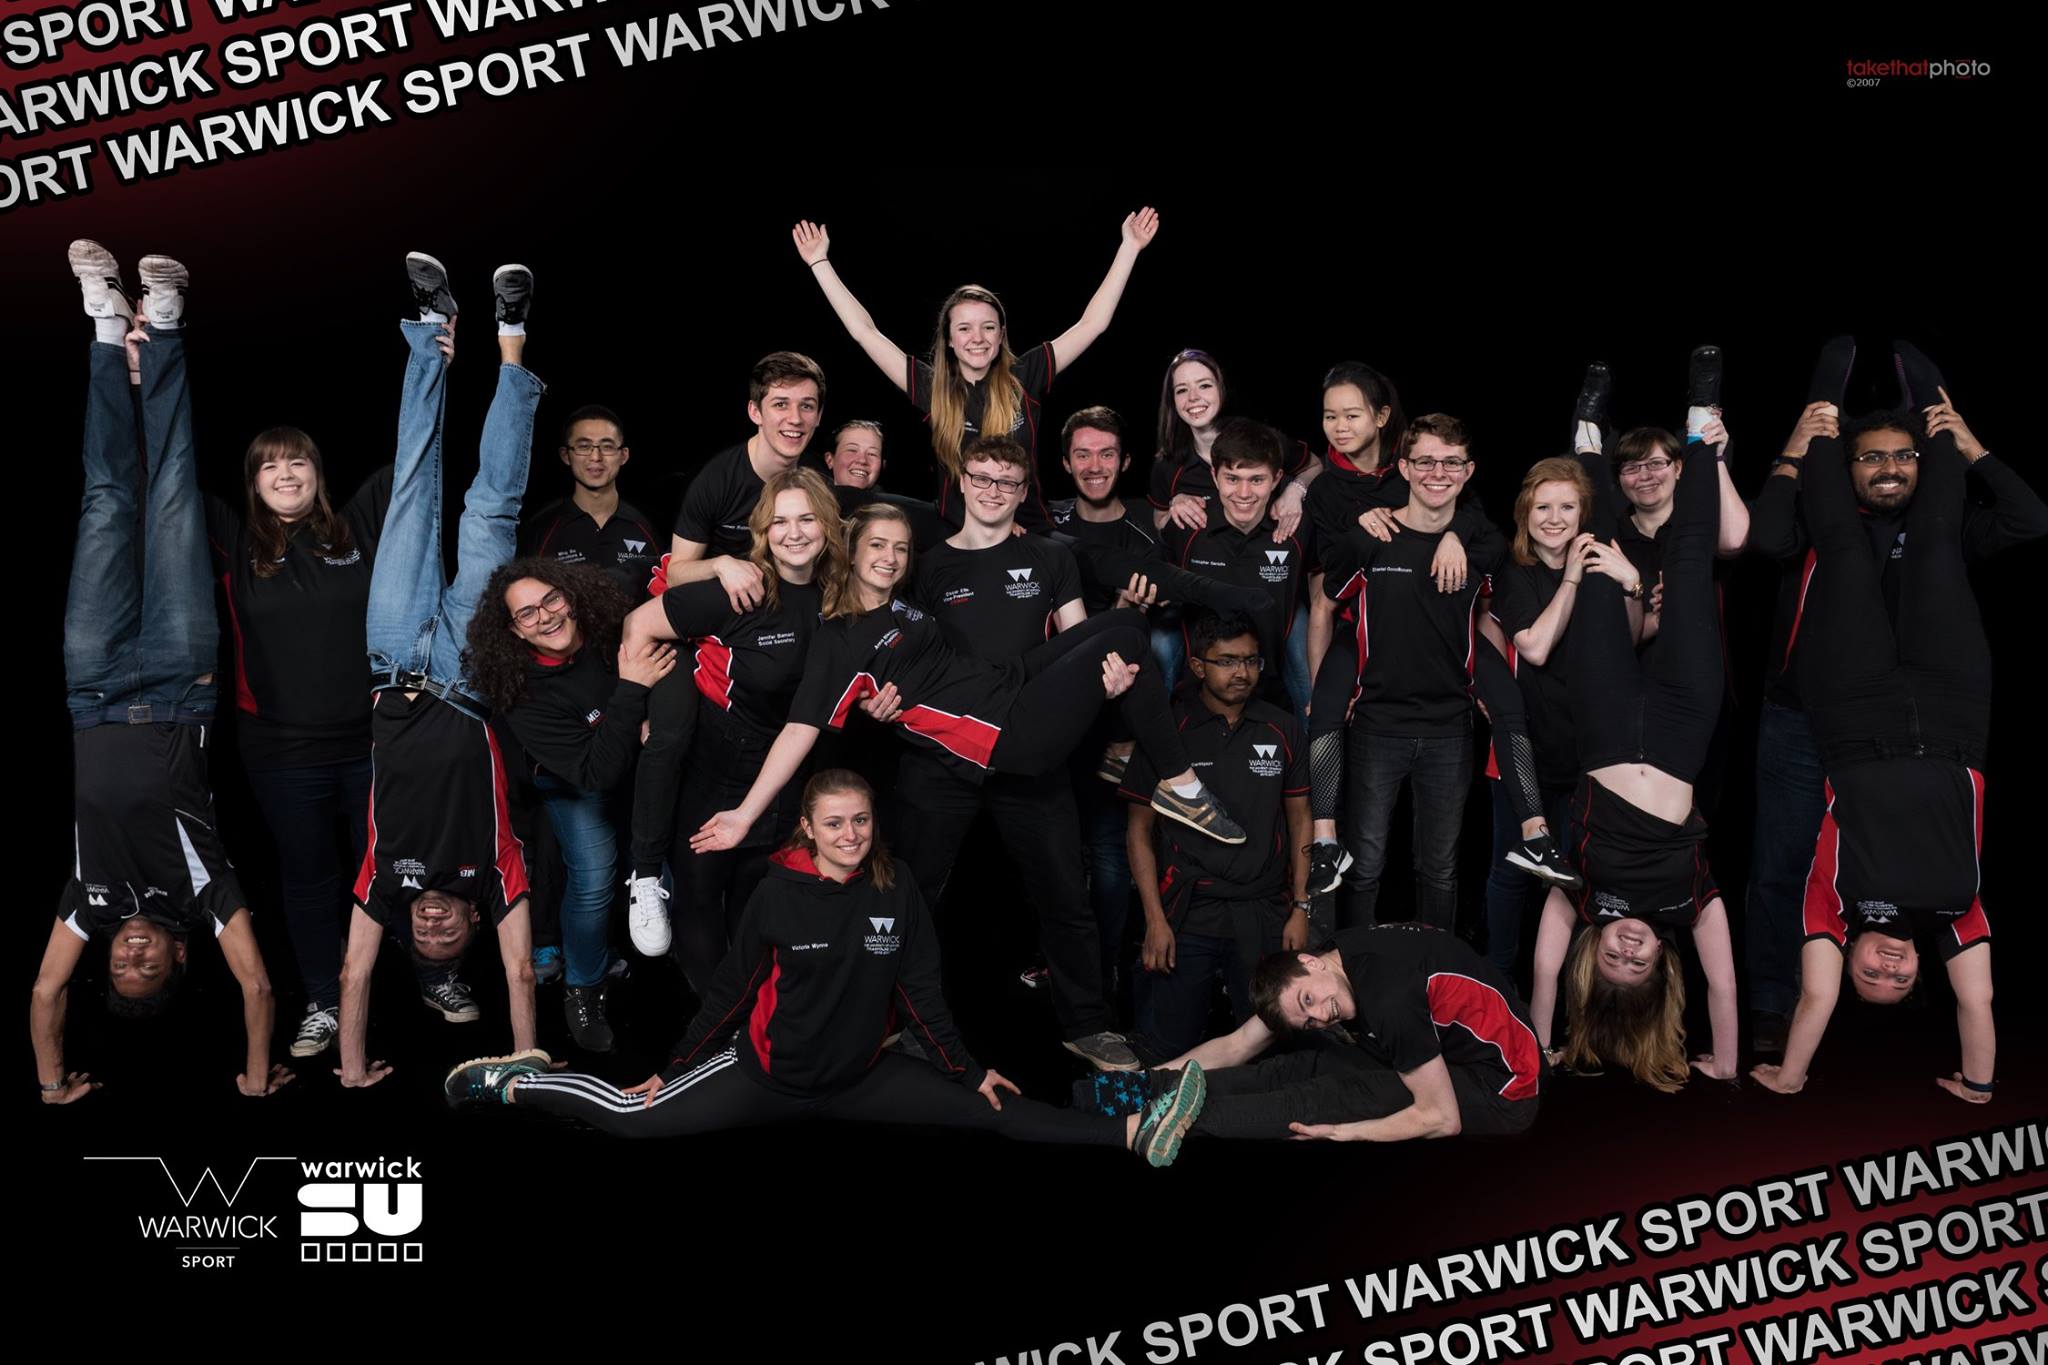 University of Warwick Trampoline Club